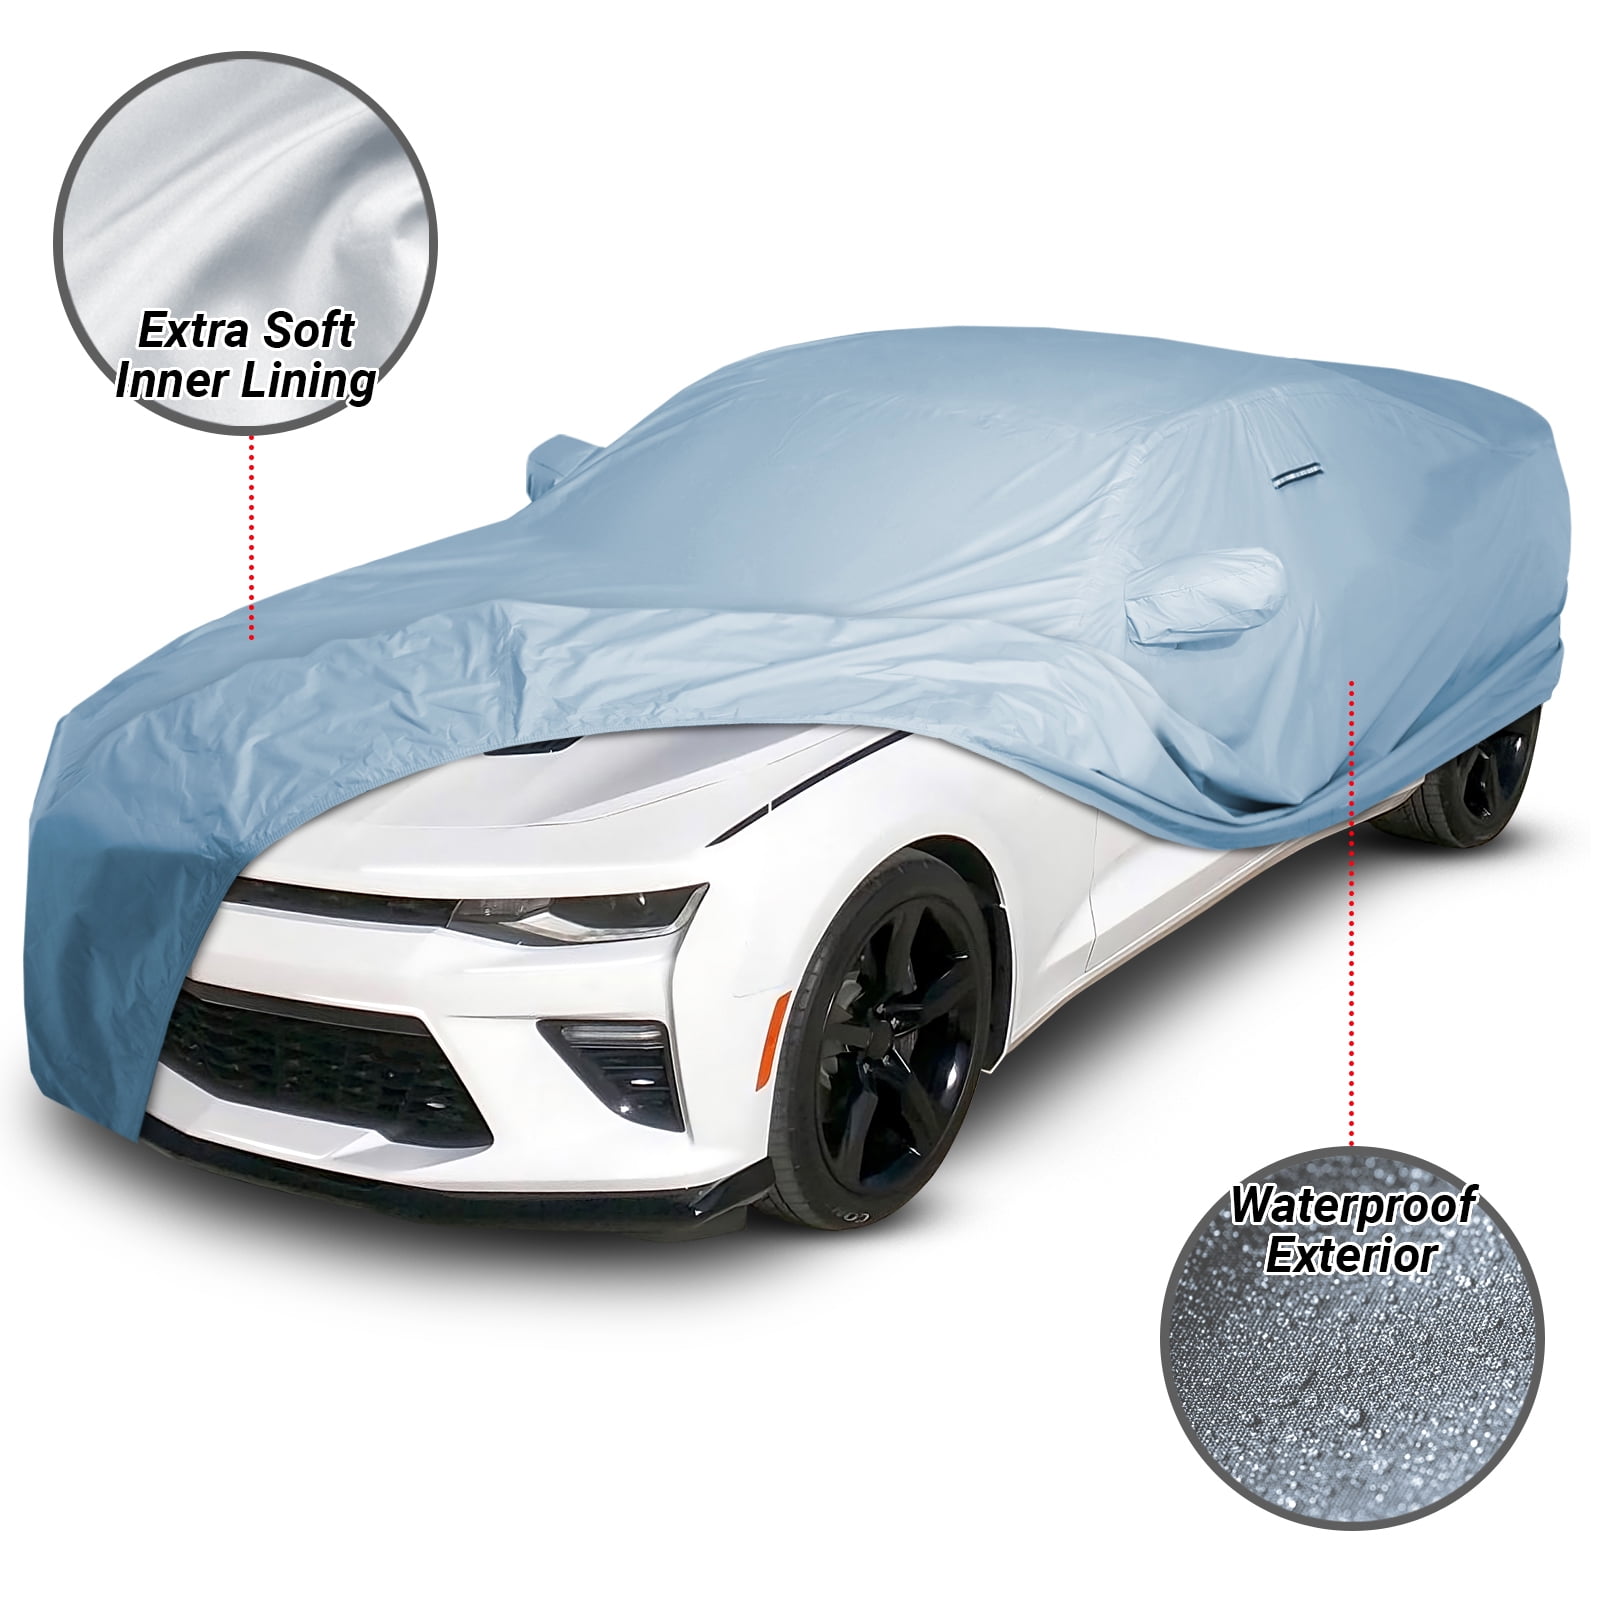 Covercraft Custom Fit Car Cover for Chevrolet Camaro (Technalon Evolution  Fabric, Gray)